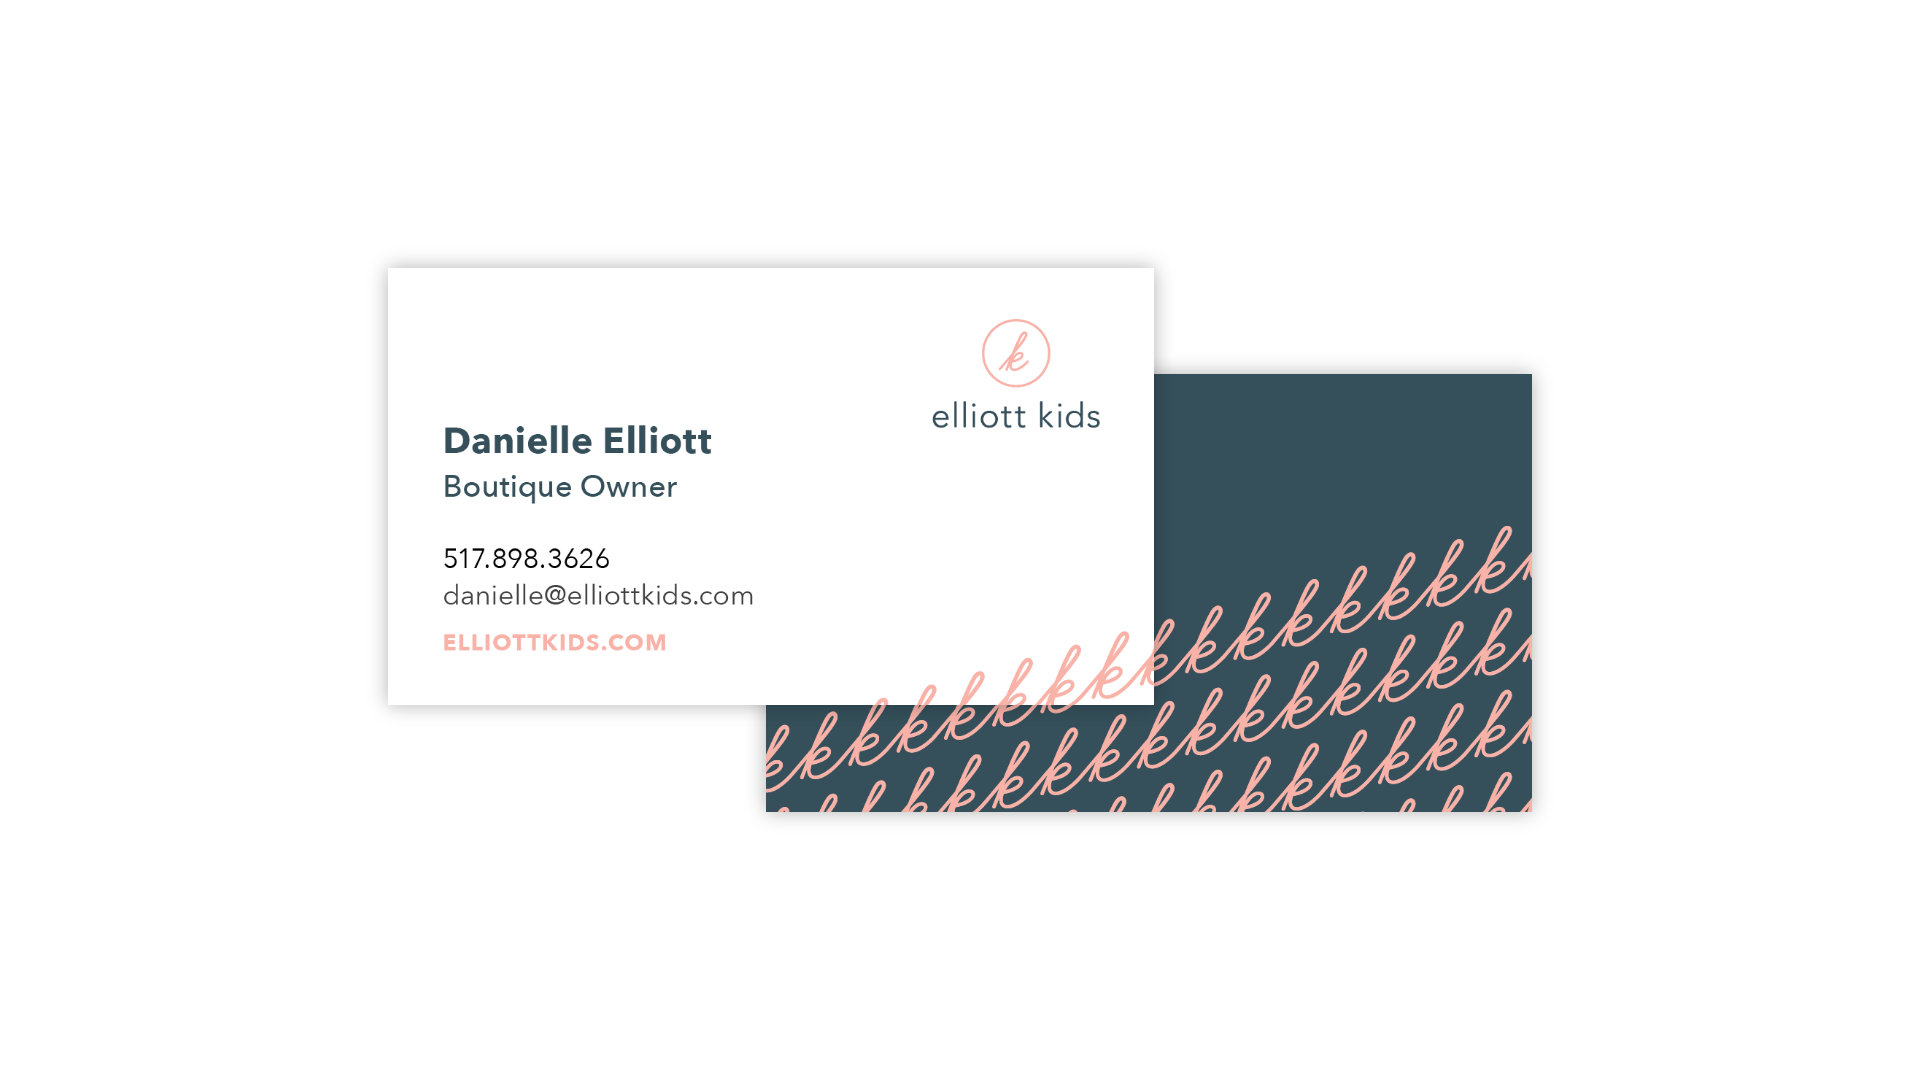 An image of business card mockups for Danielle Elliott the owner of Elliott Kids Clothing Boutique.